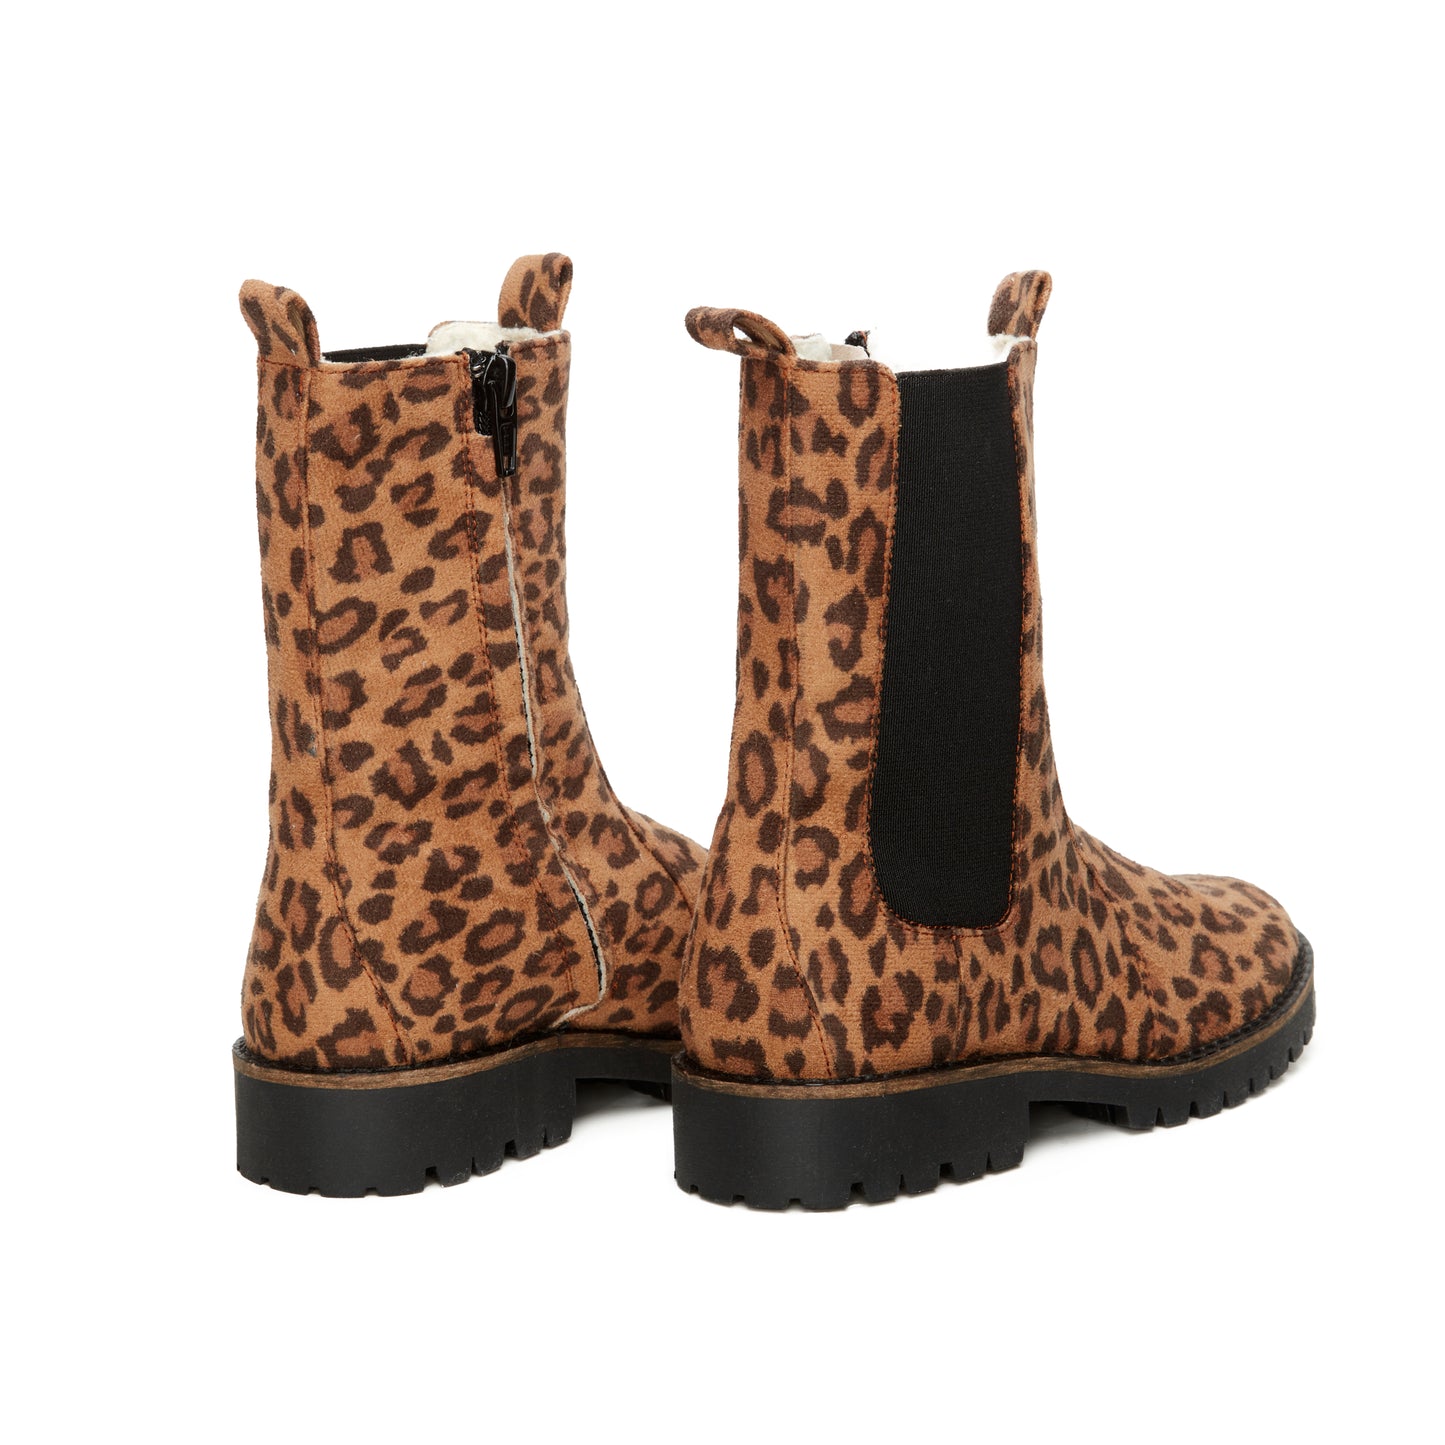 Bear & Mees Chelsea Boots Leopard